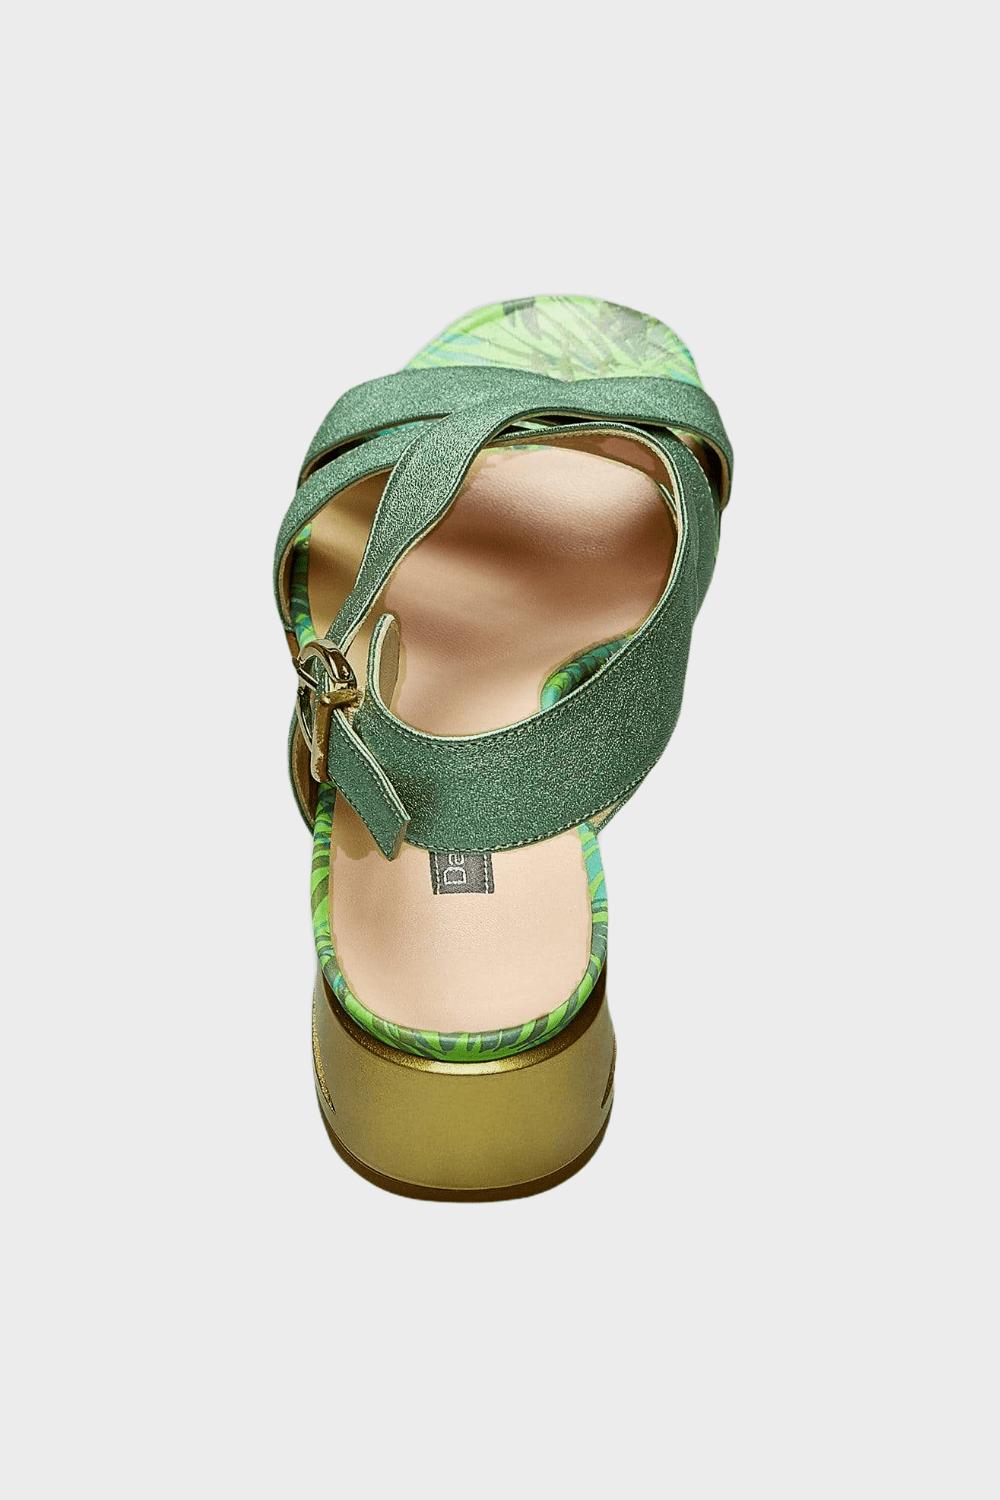 Danilo di Lea by Roselina SHOES Celestia Moss Green Crossover Leather Sandals